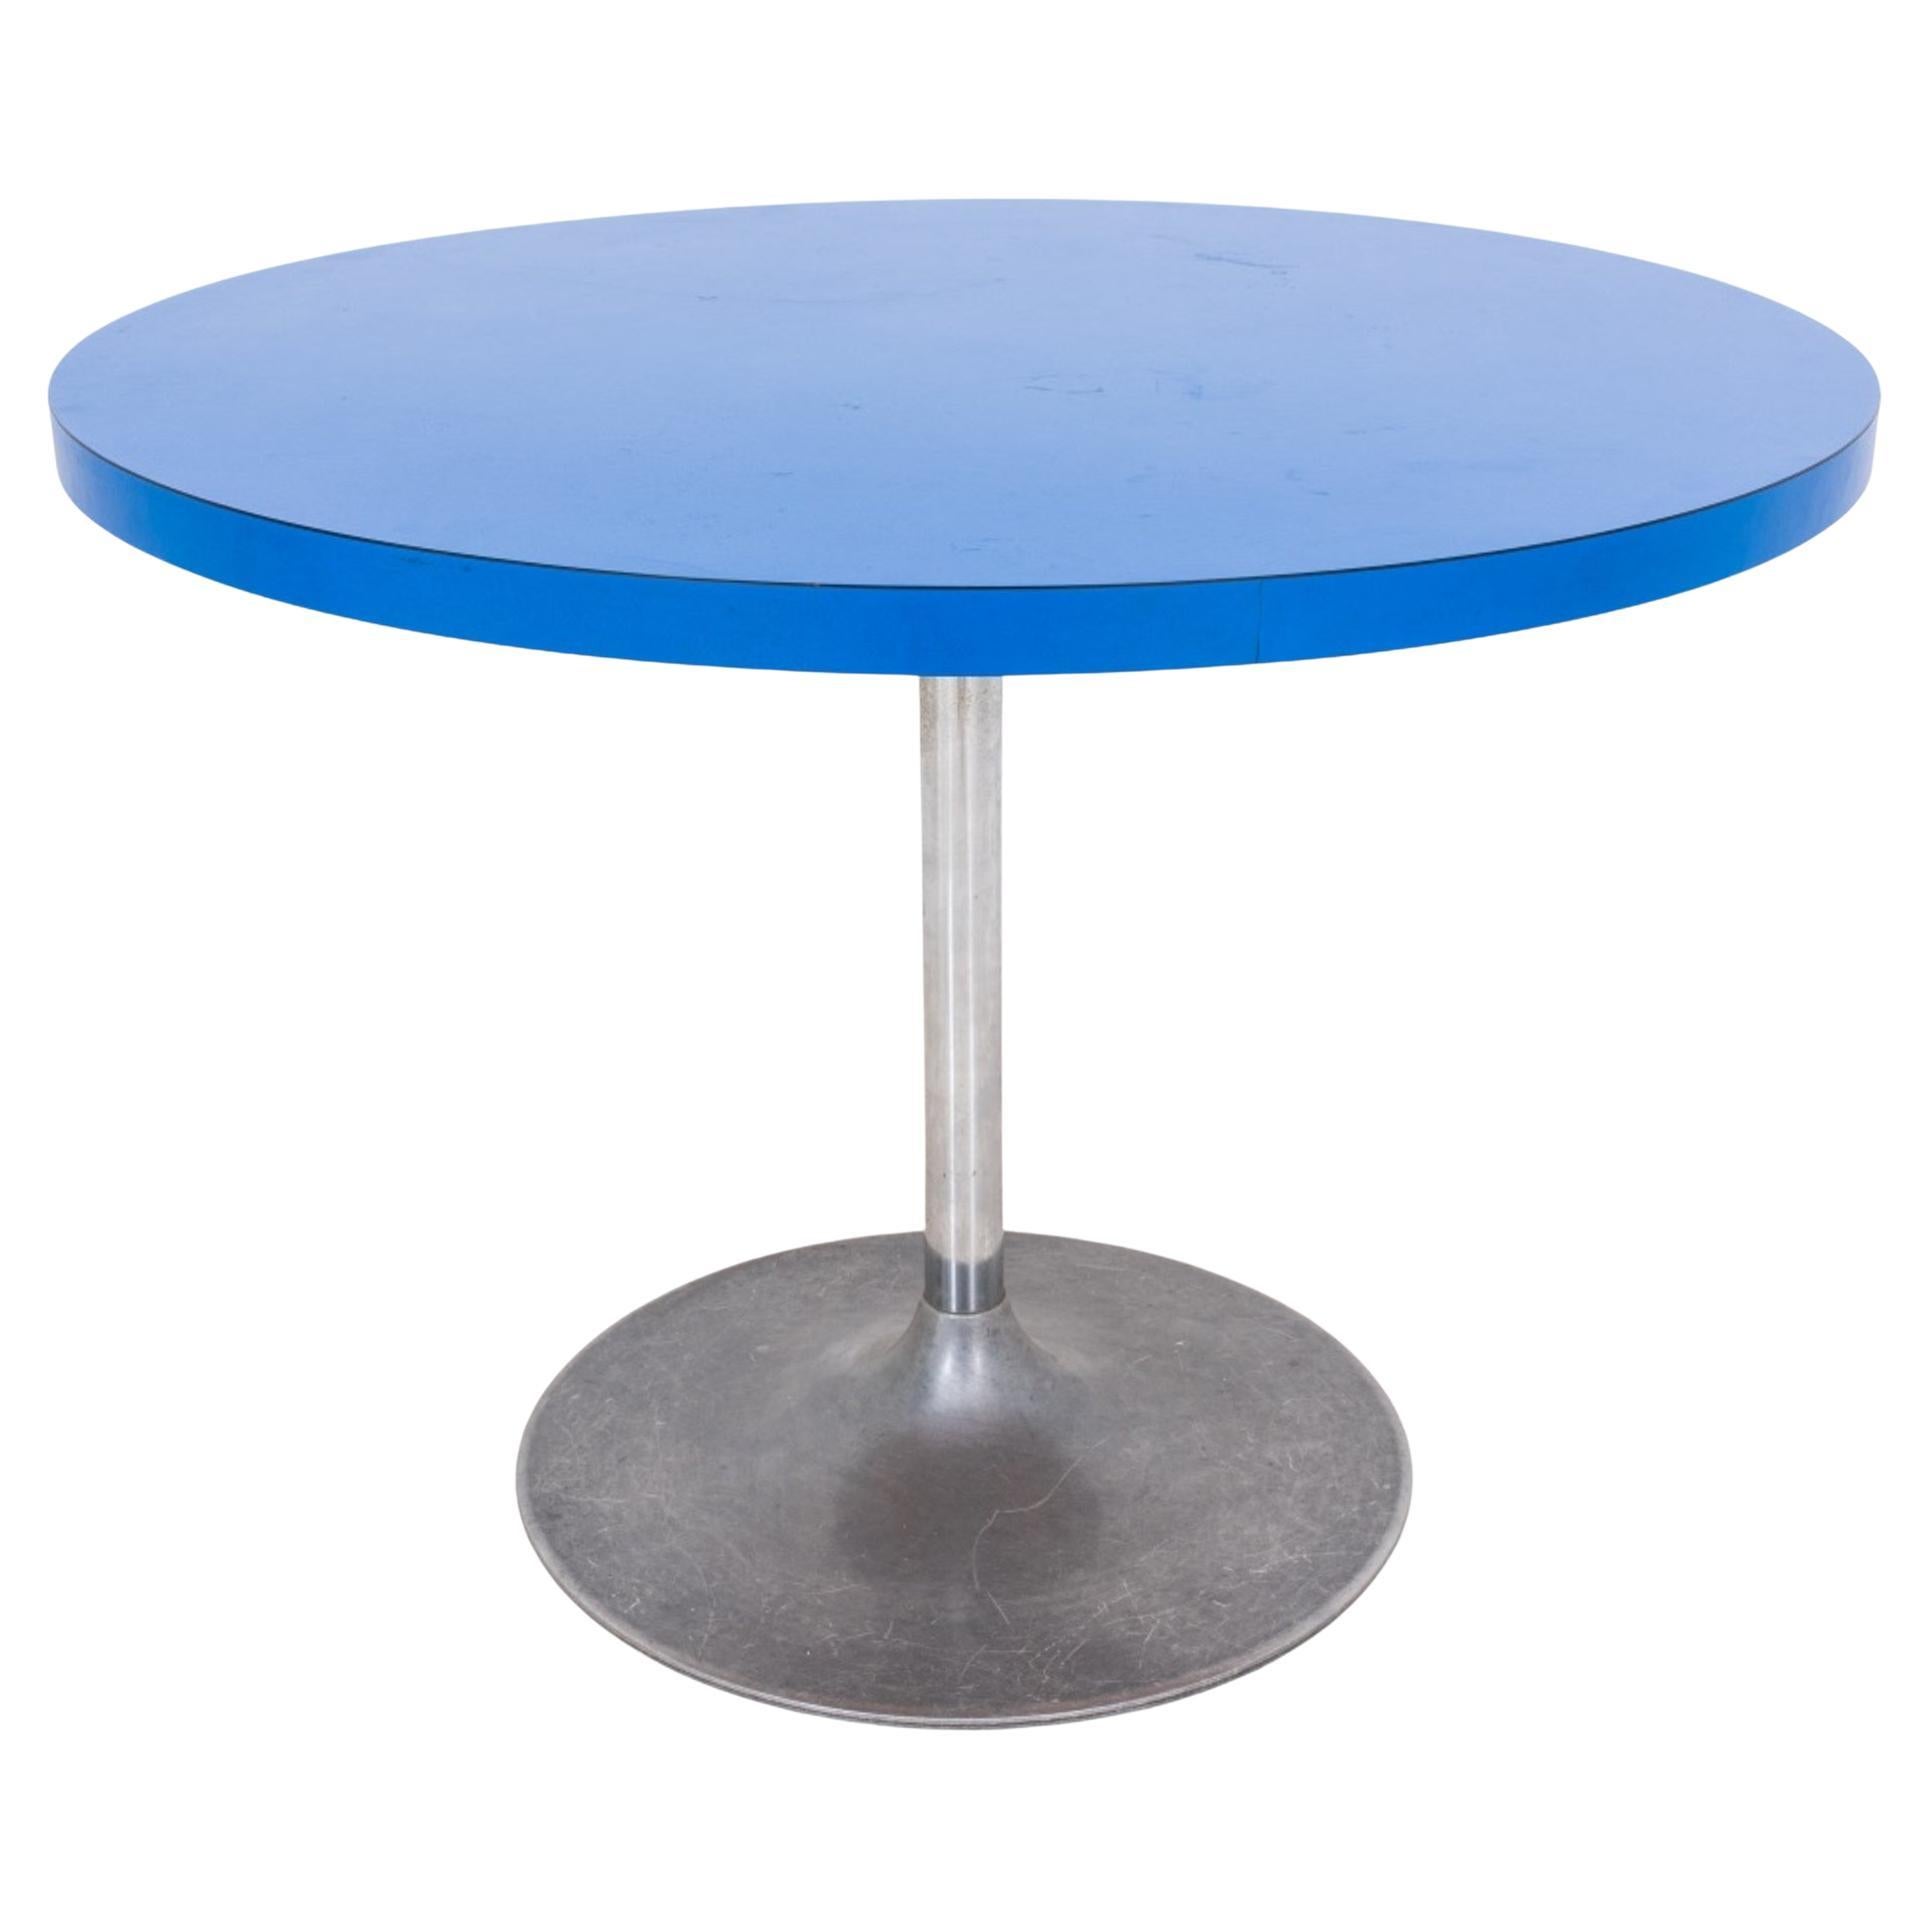 Mid-Century Modern Chrome Pedestal Table